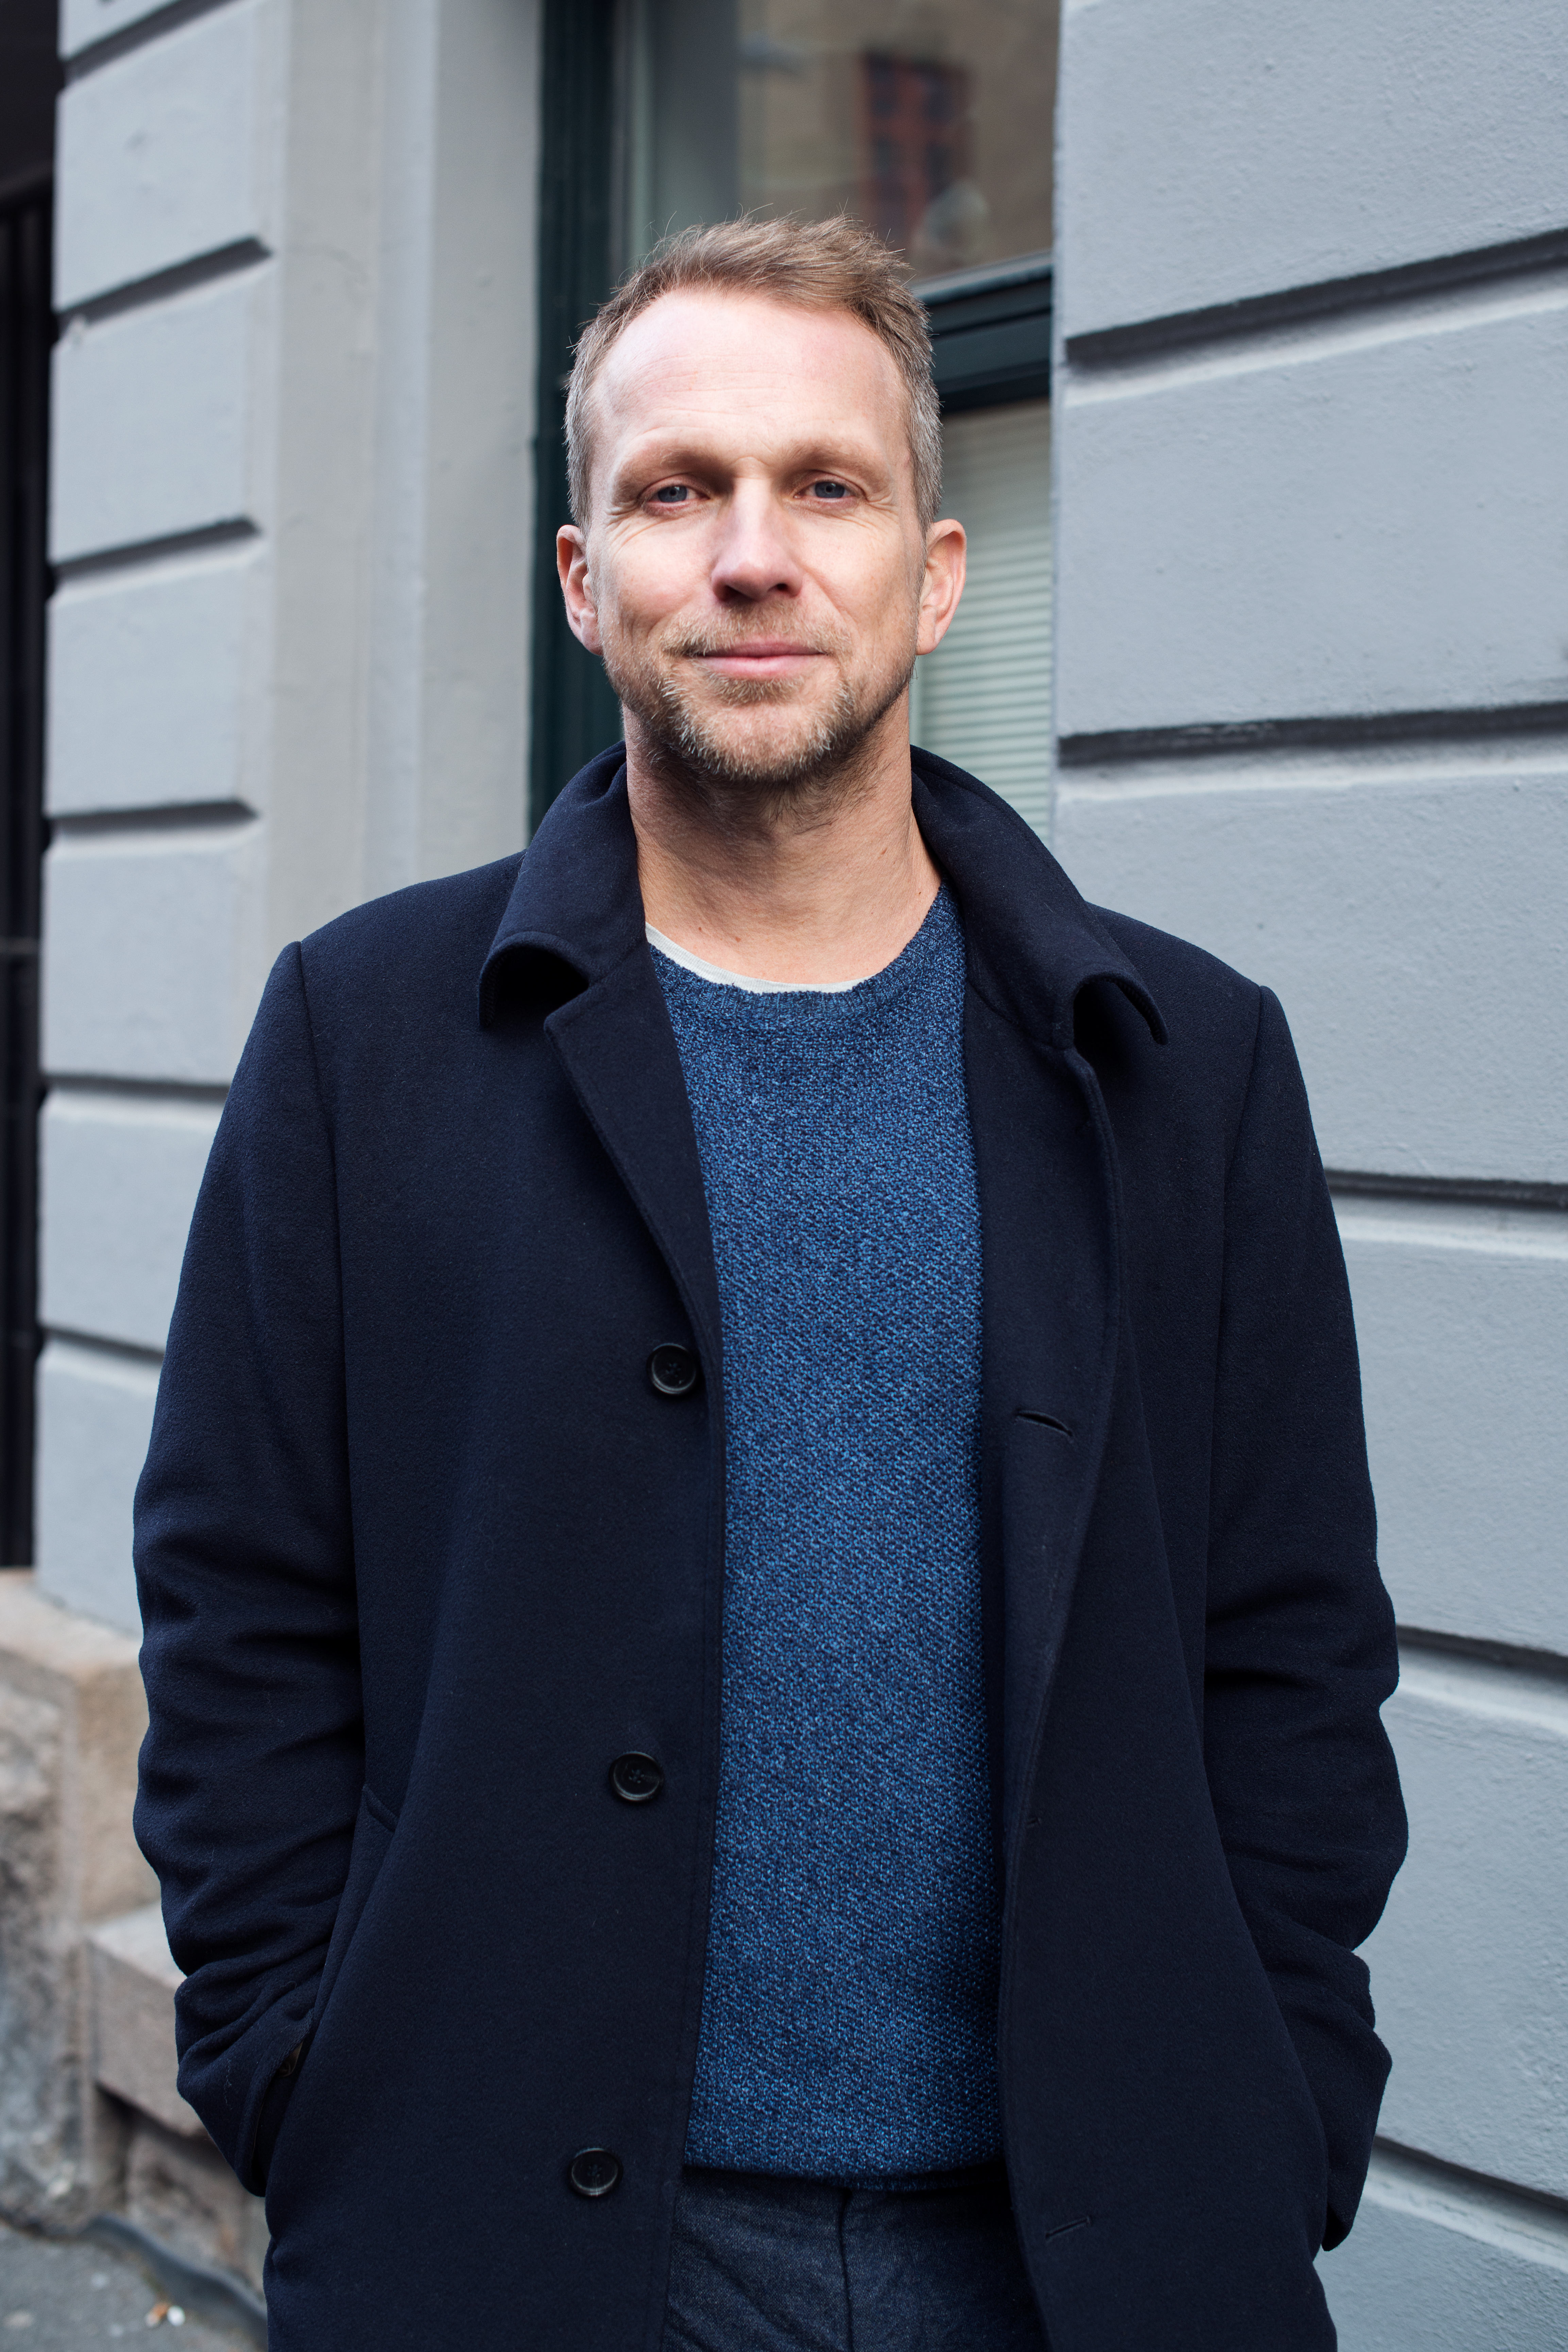 Lars Joachim Grimstad